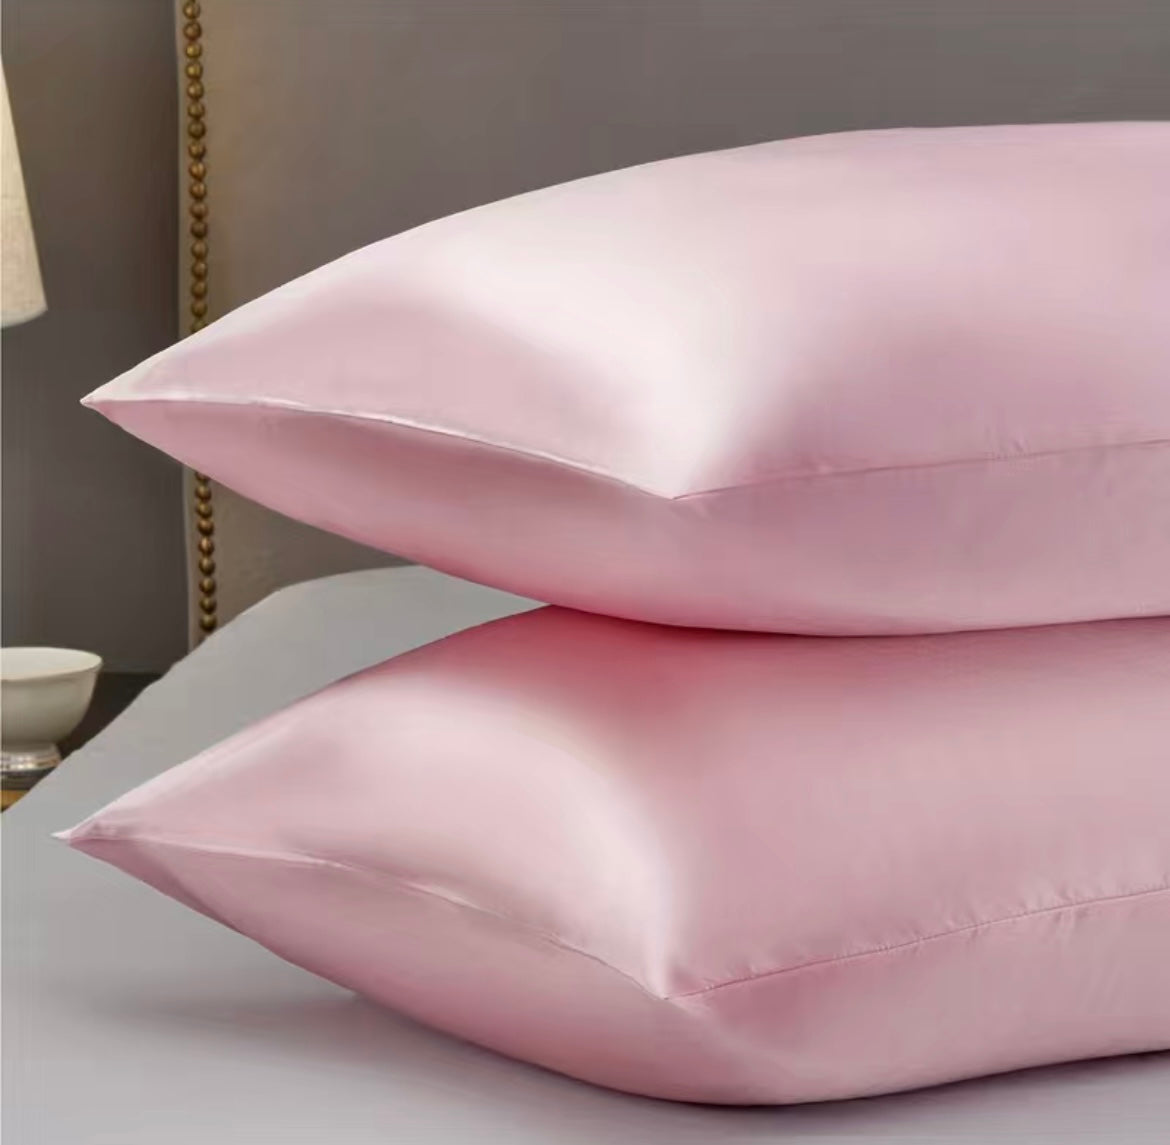 2 pcs Pink satin pillowcase 20 x 30 inches